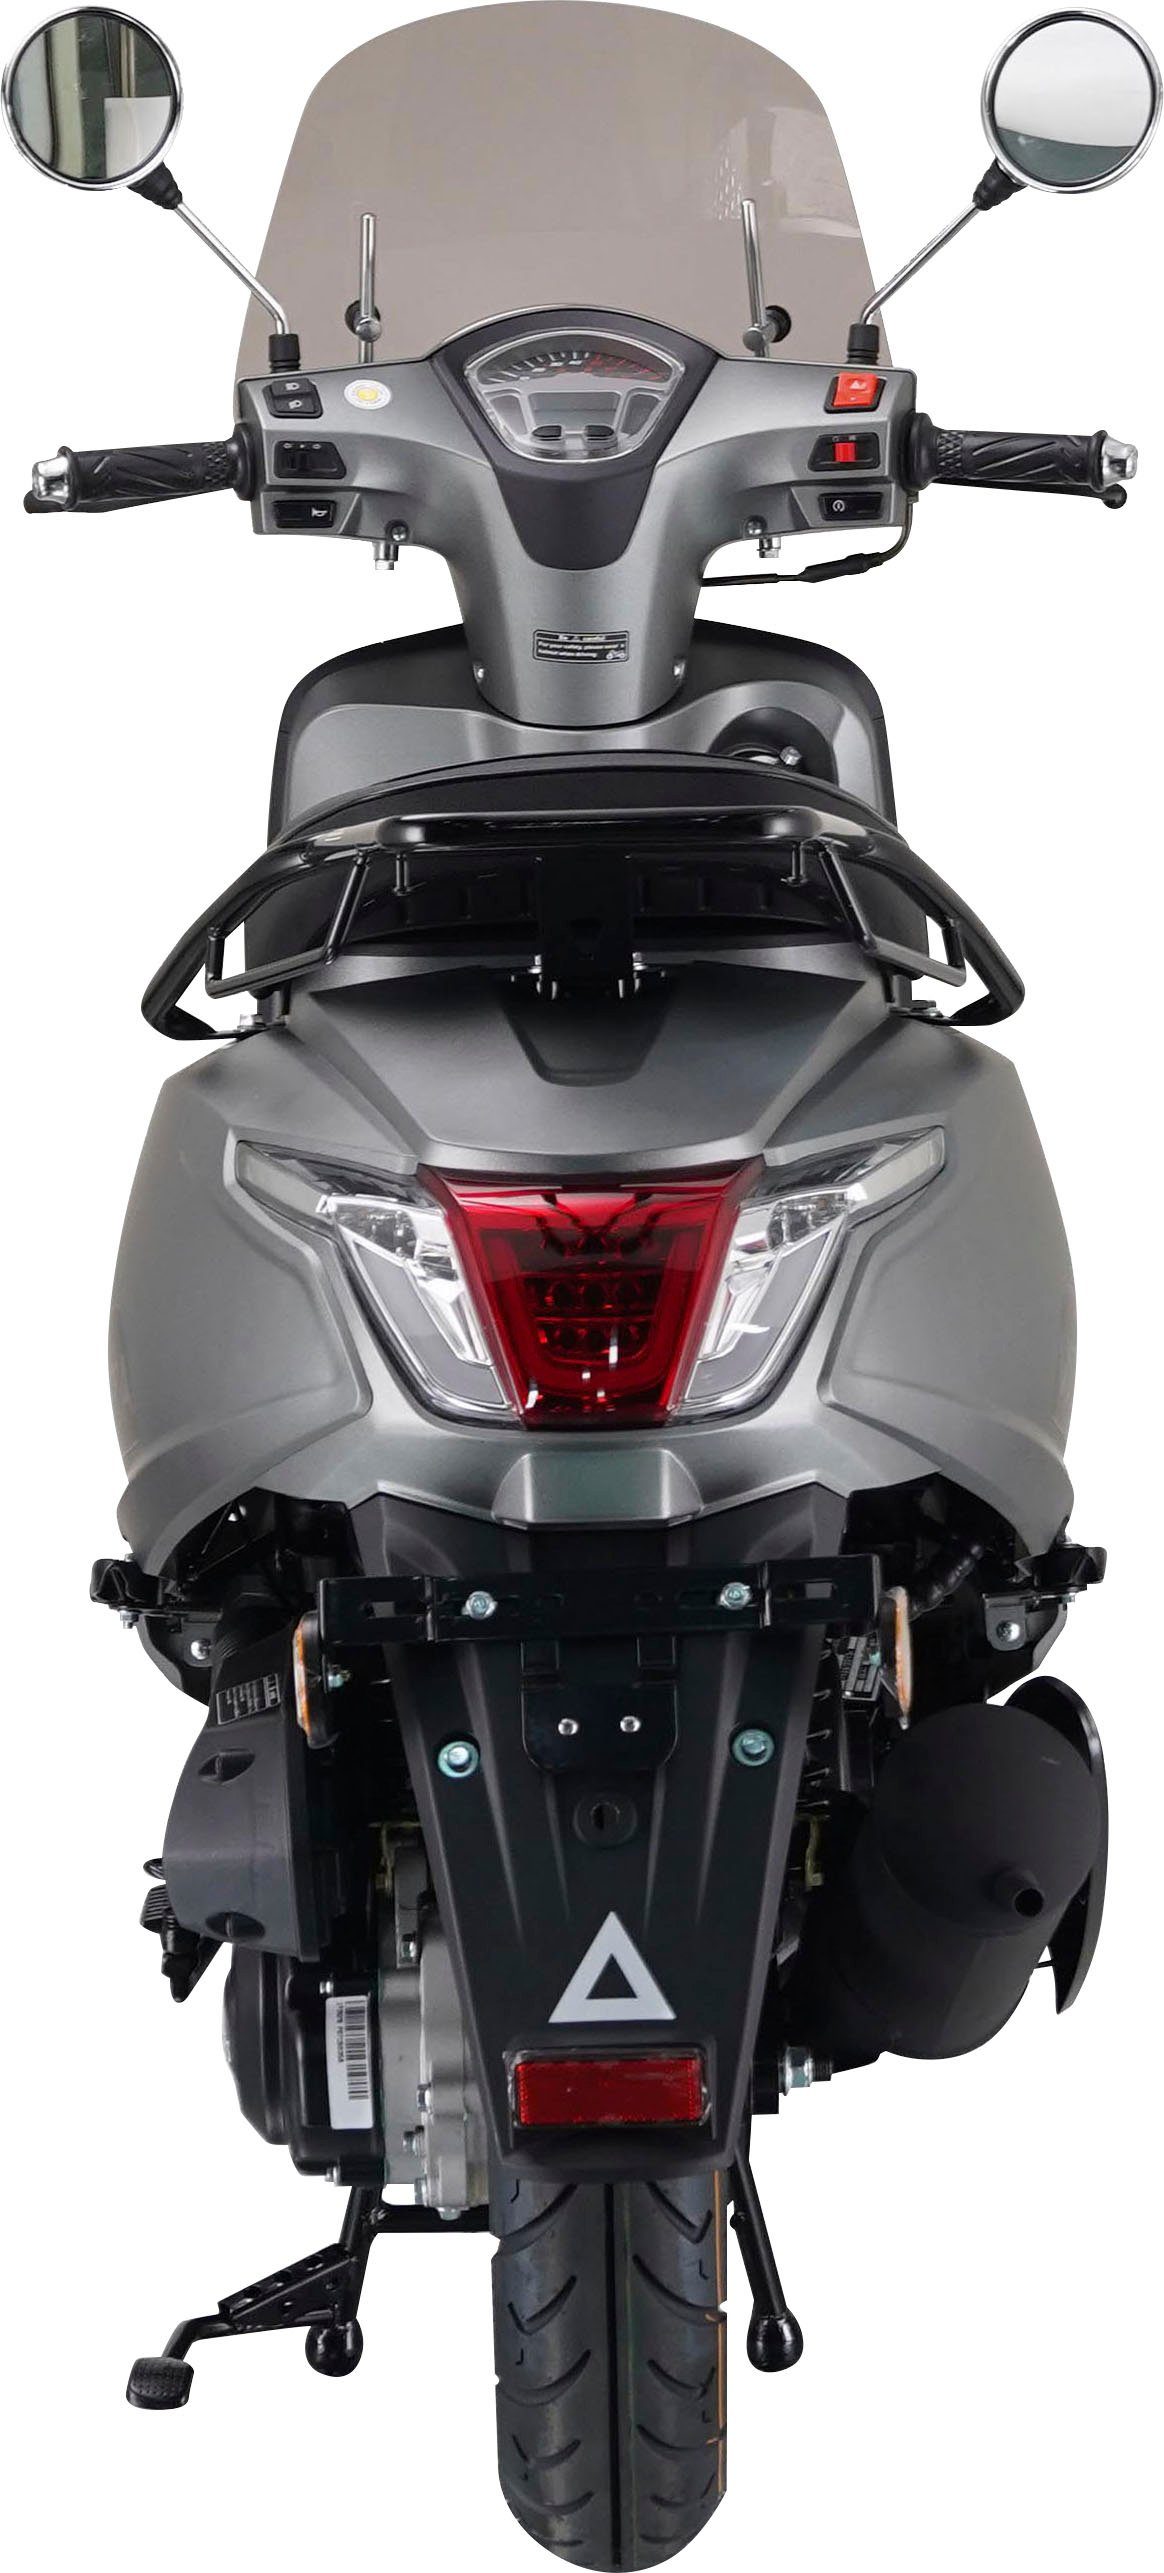 Alpha Motors Motorroller Vita, 5, 50 85 Euro inkl. km/h, Windschild ccm